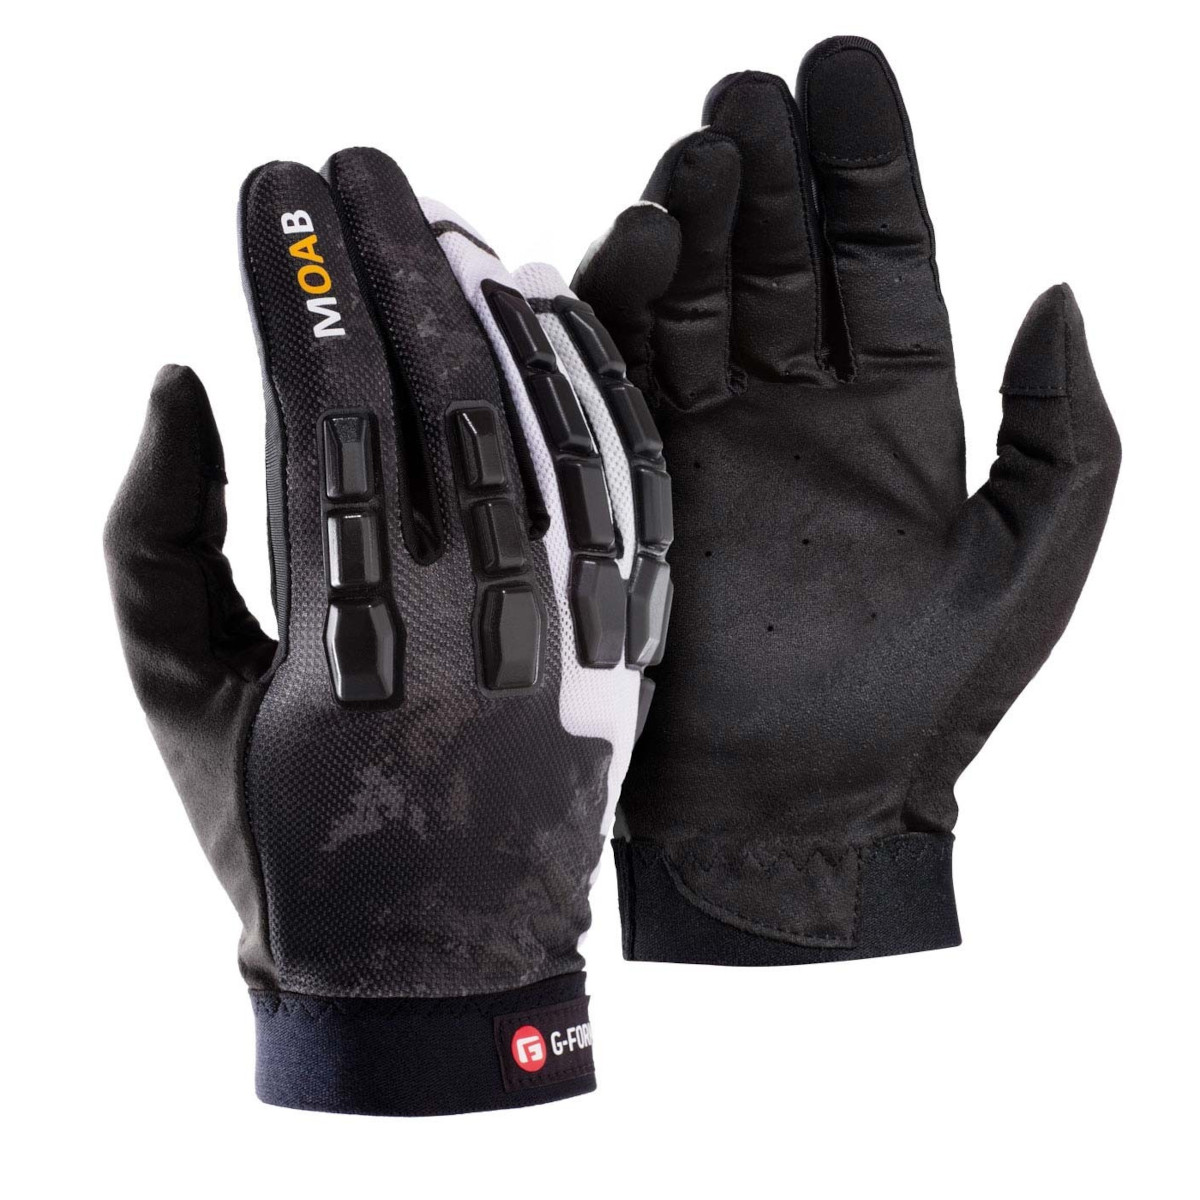 Productfoto van G-Form Moab Trail Gloves - black / white